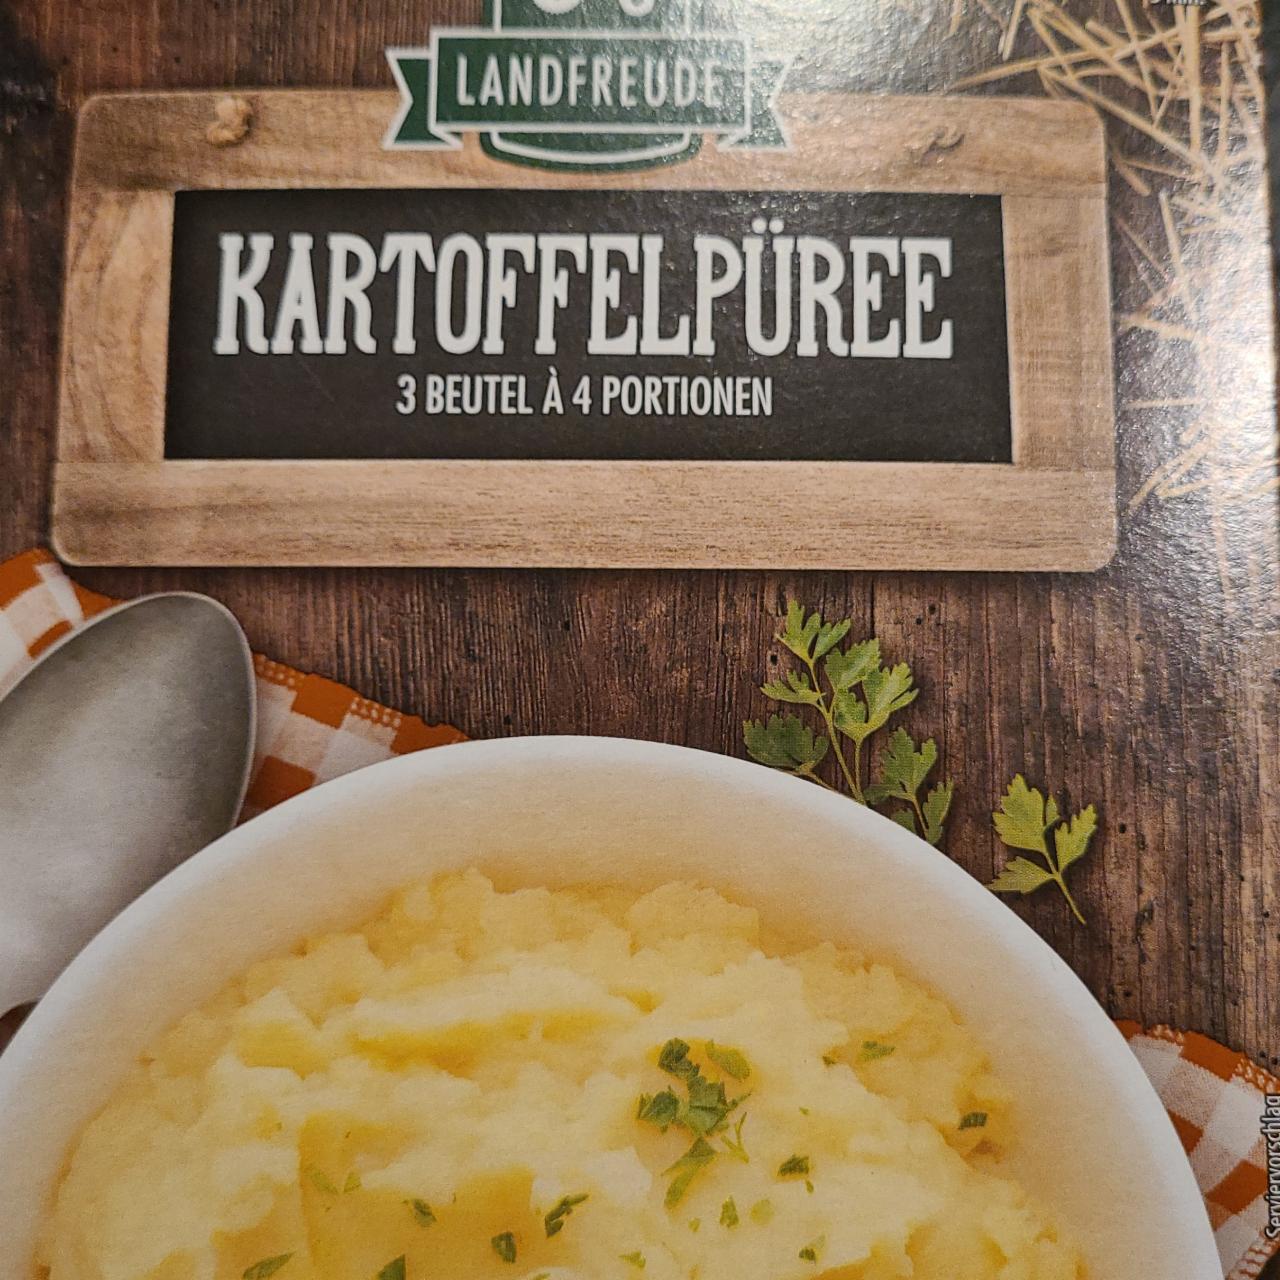 Fotografie - Kartoffelpüree LandFreude